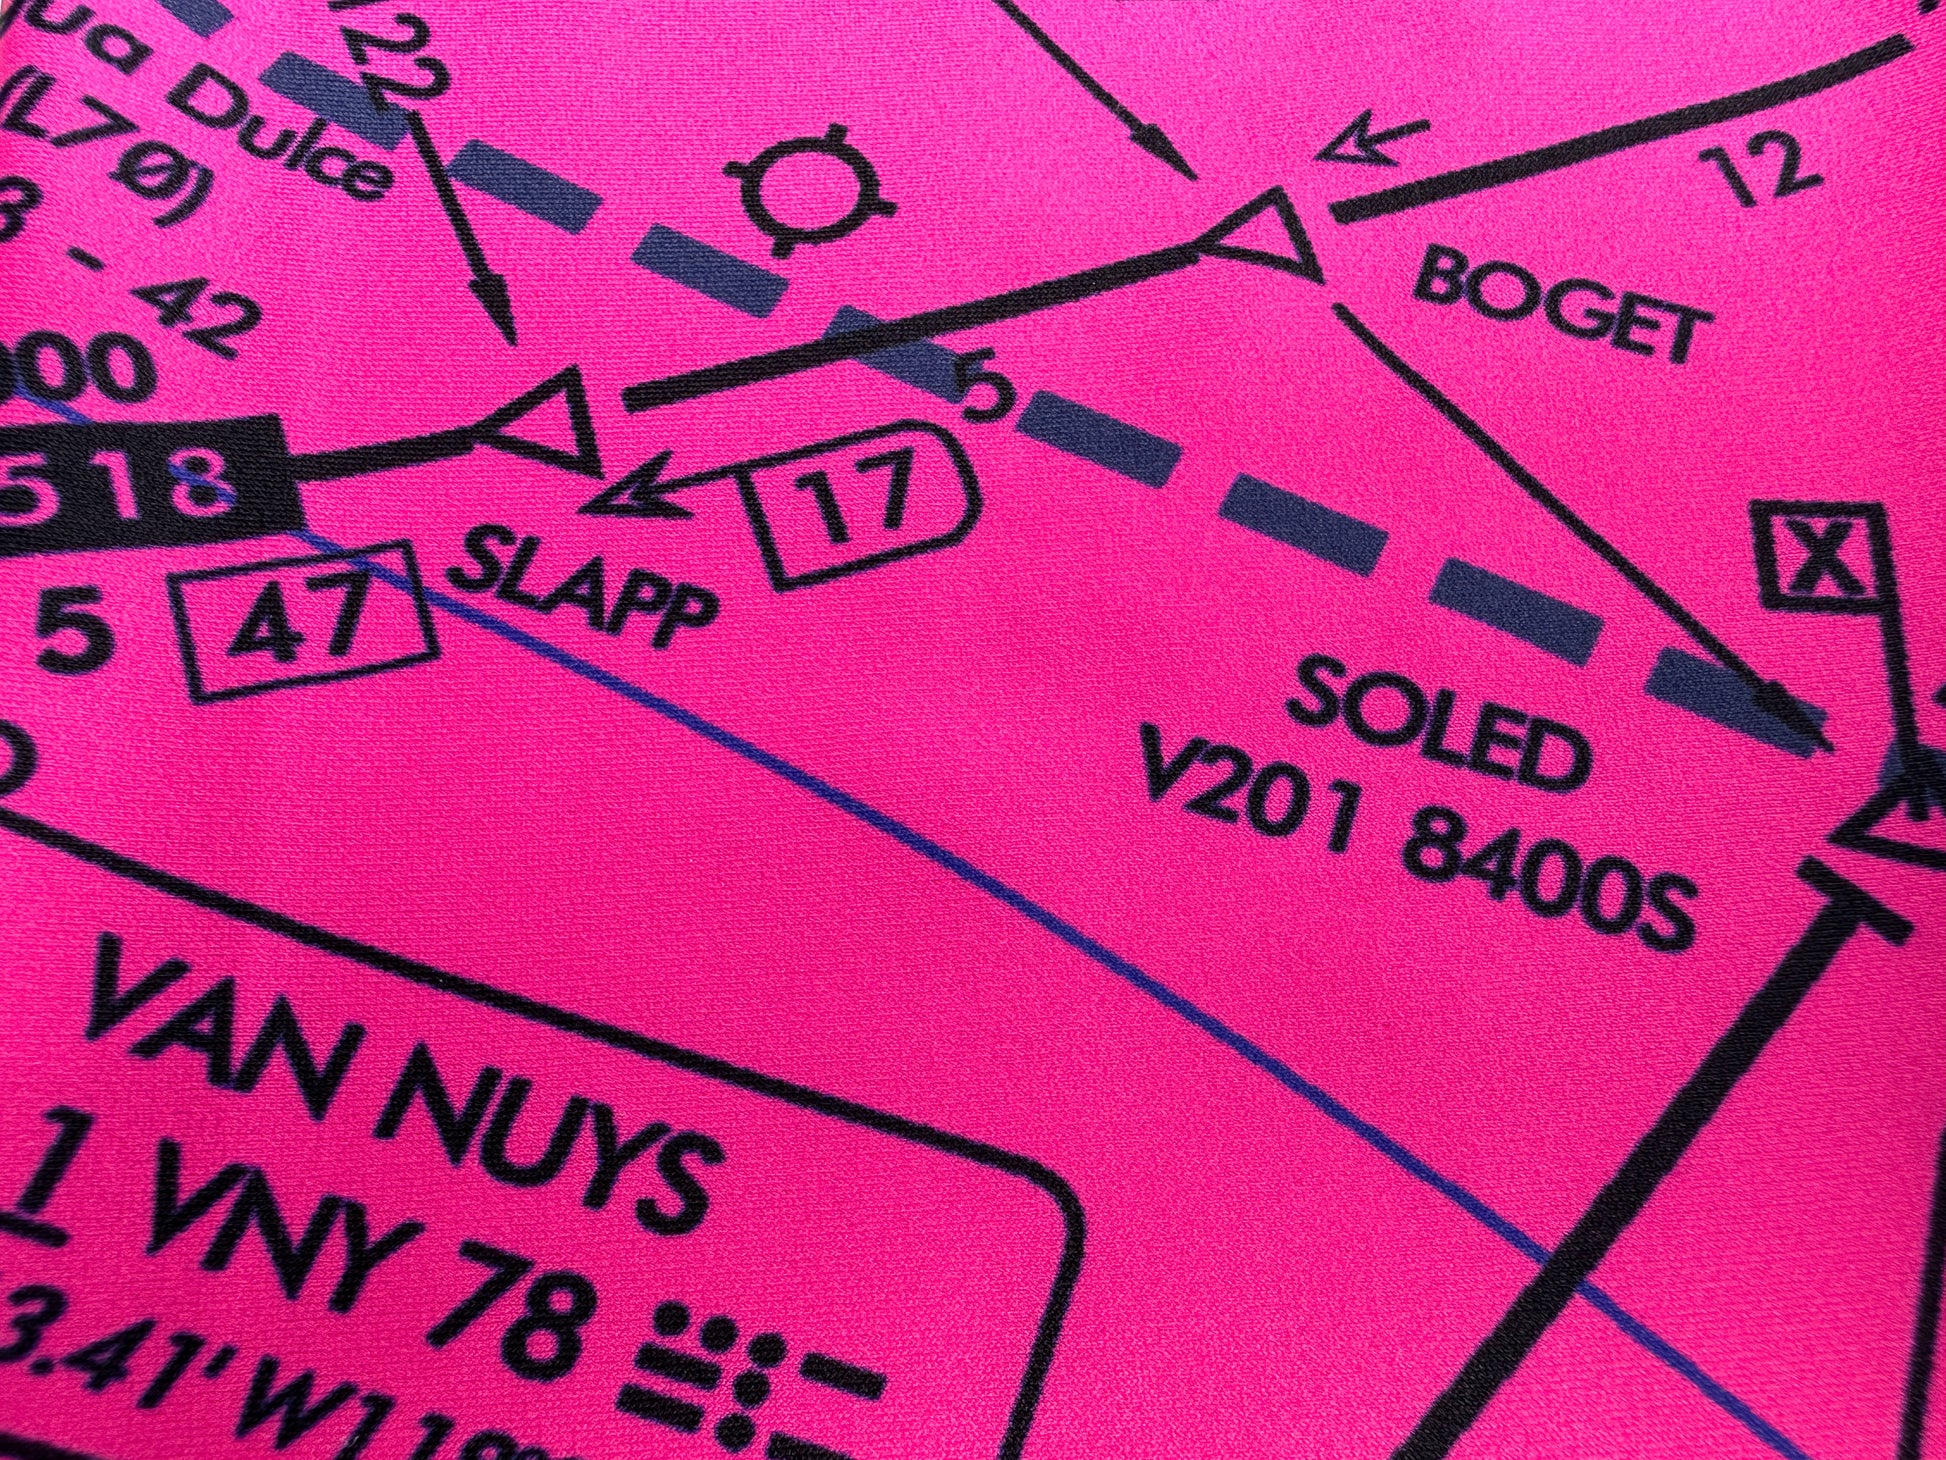 Enroute Low Altitude (ELUS3) Chart leggings (pink)